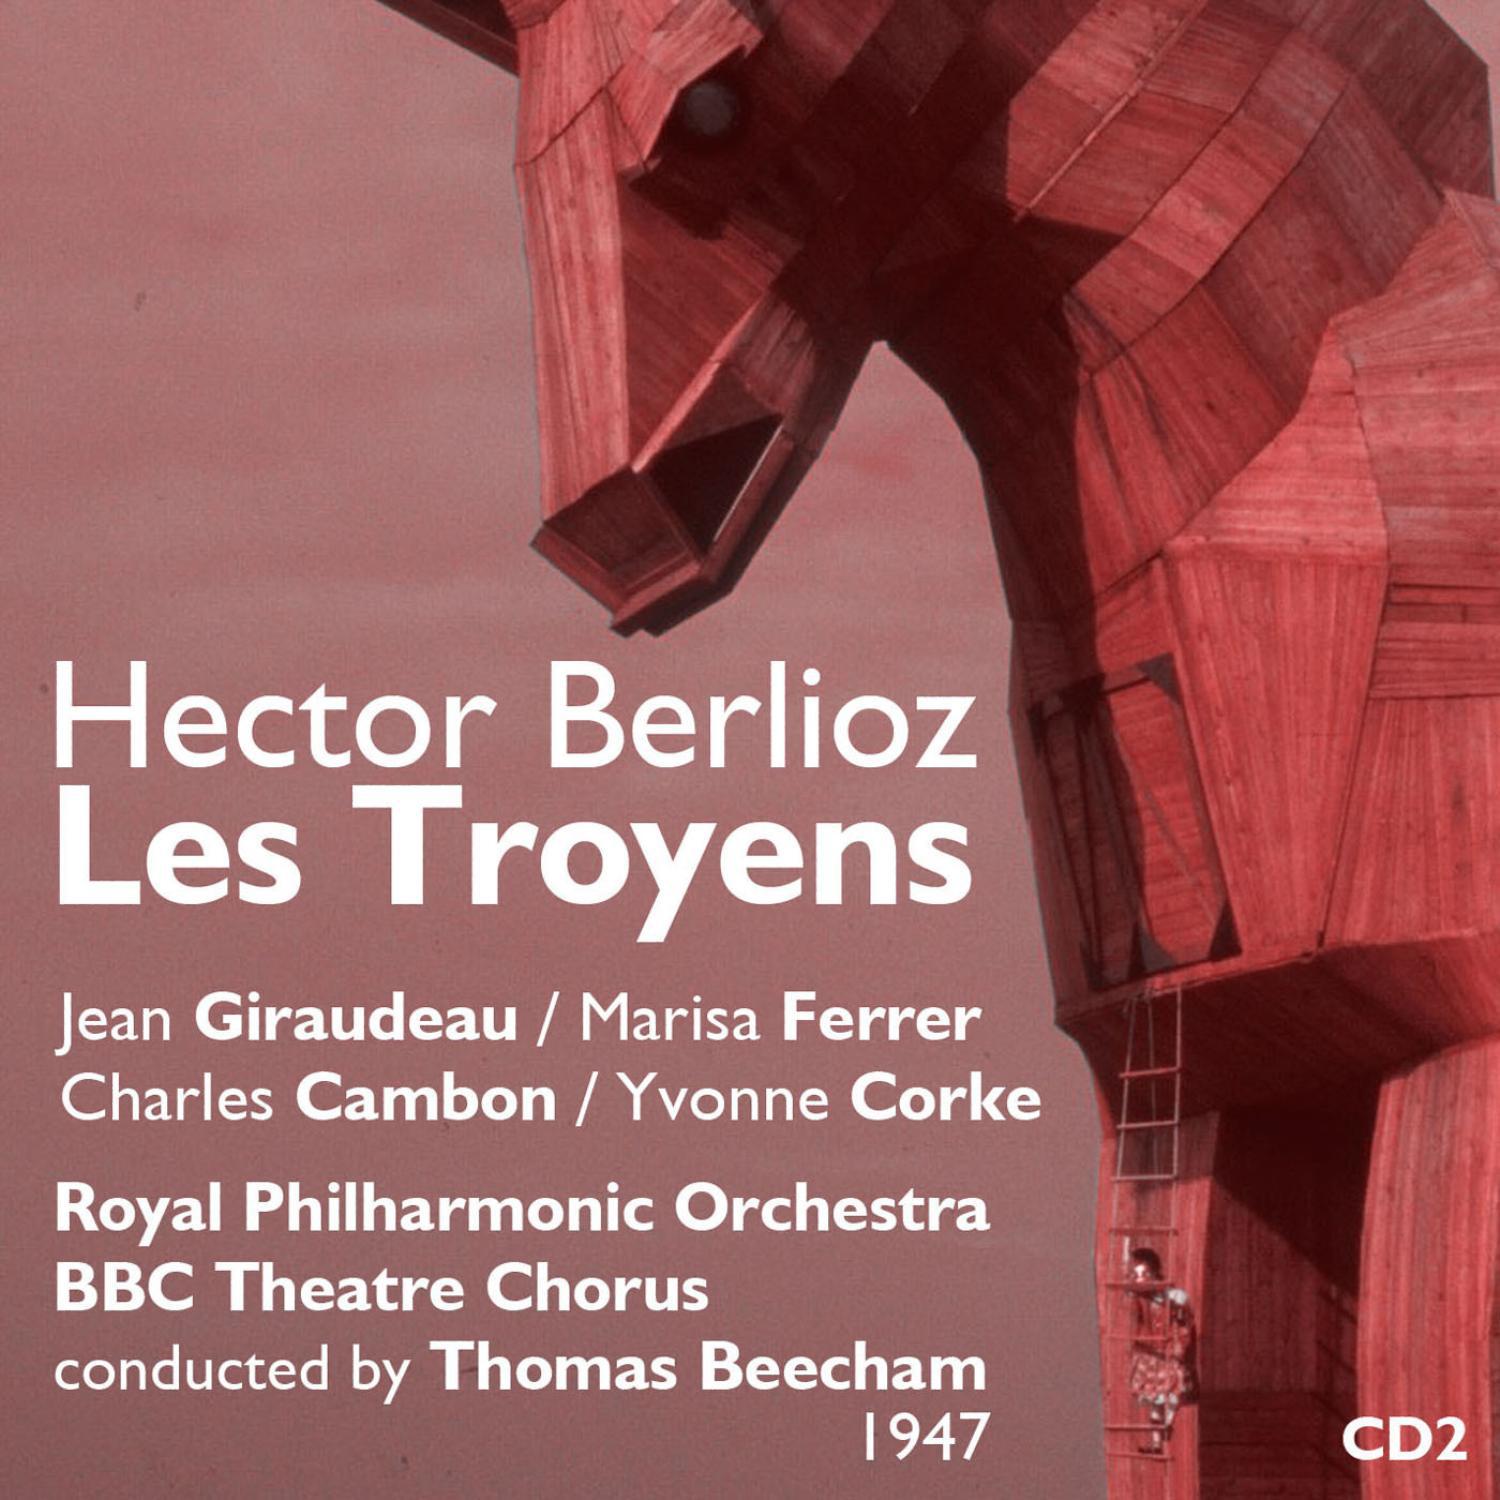 BBC Theatre Chorus - Hector Berlioz: Les Troyens - Act III, 